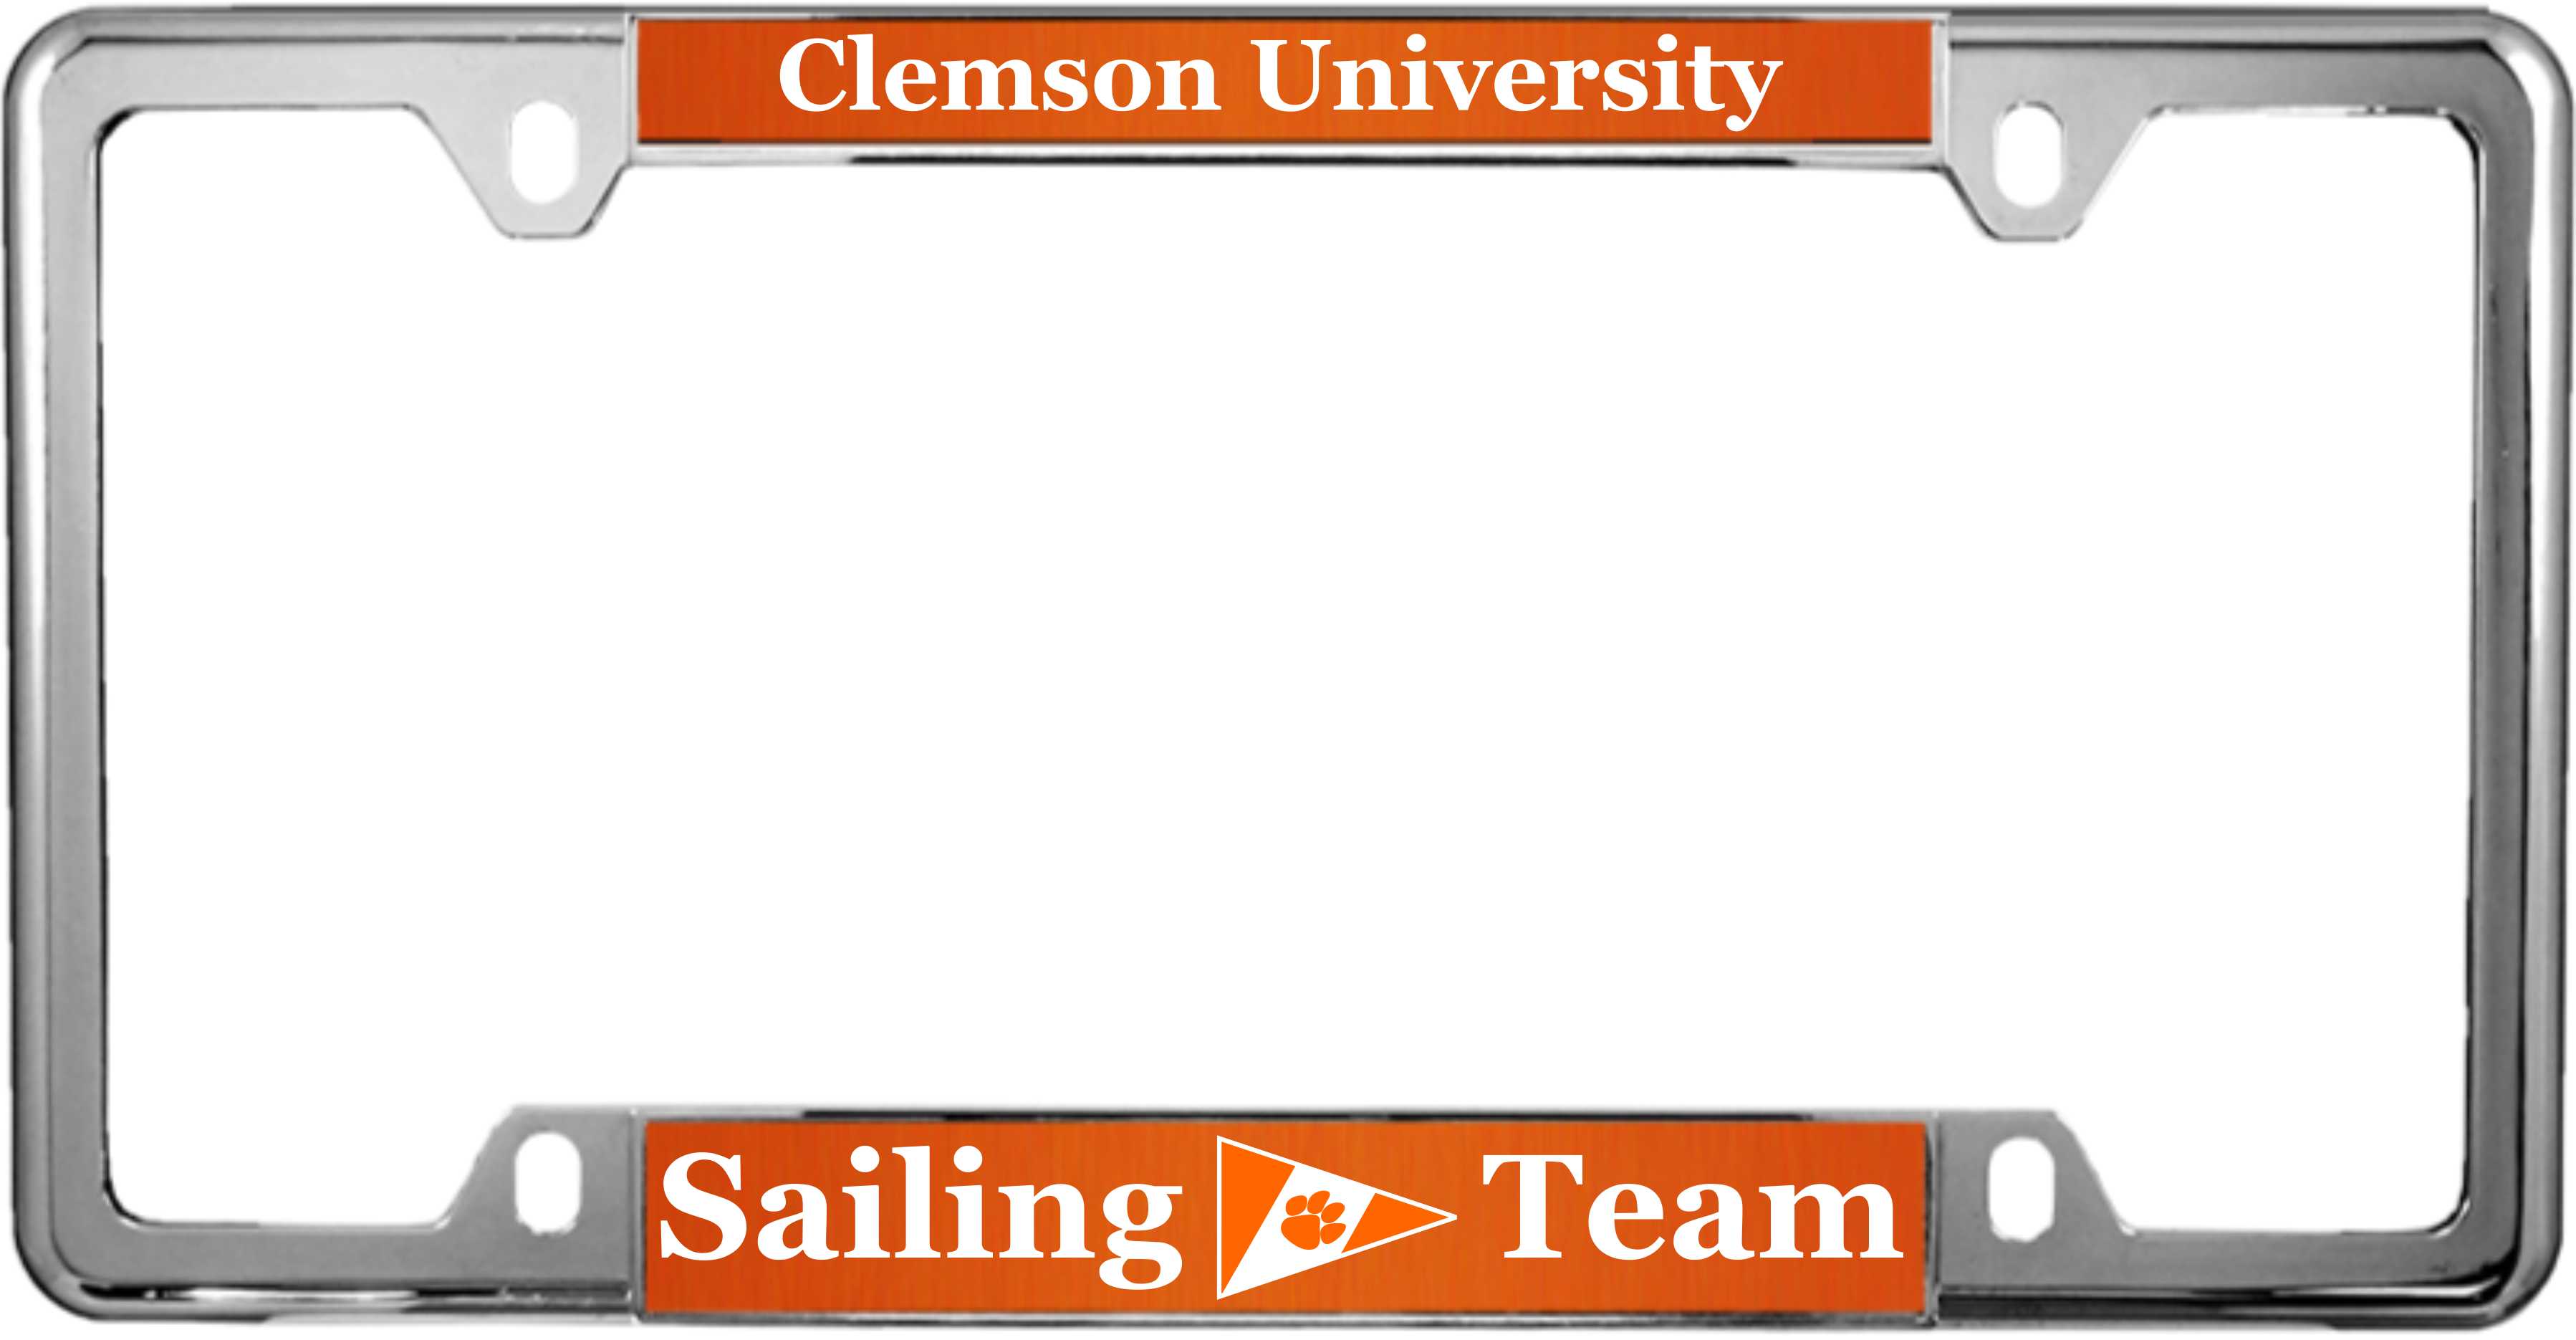 Clemson University Sailing Team Metal License Plate Frame